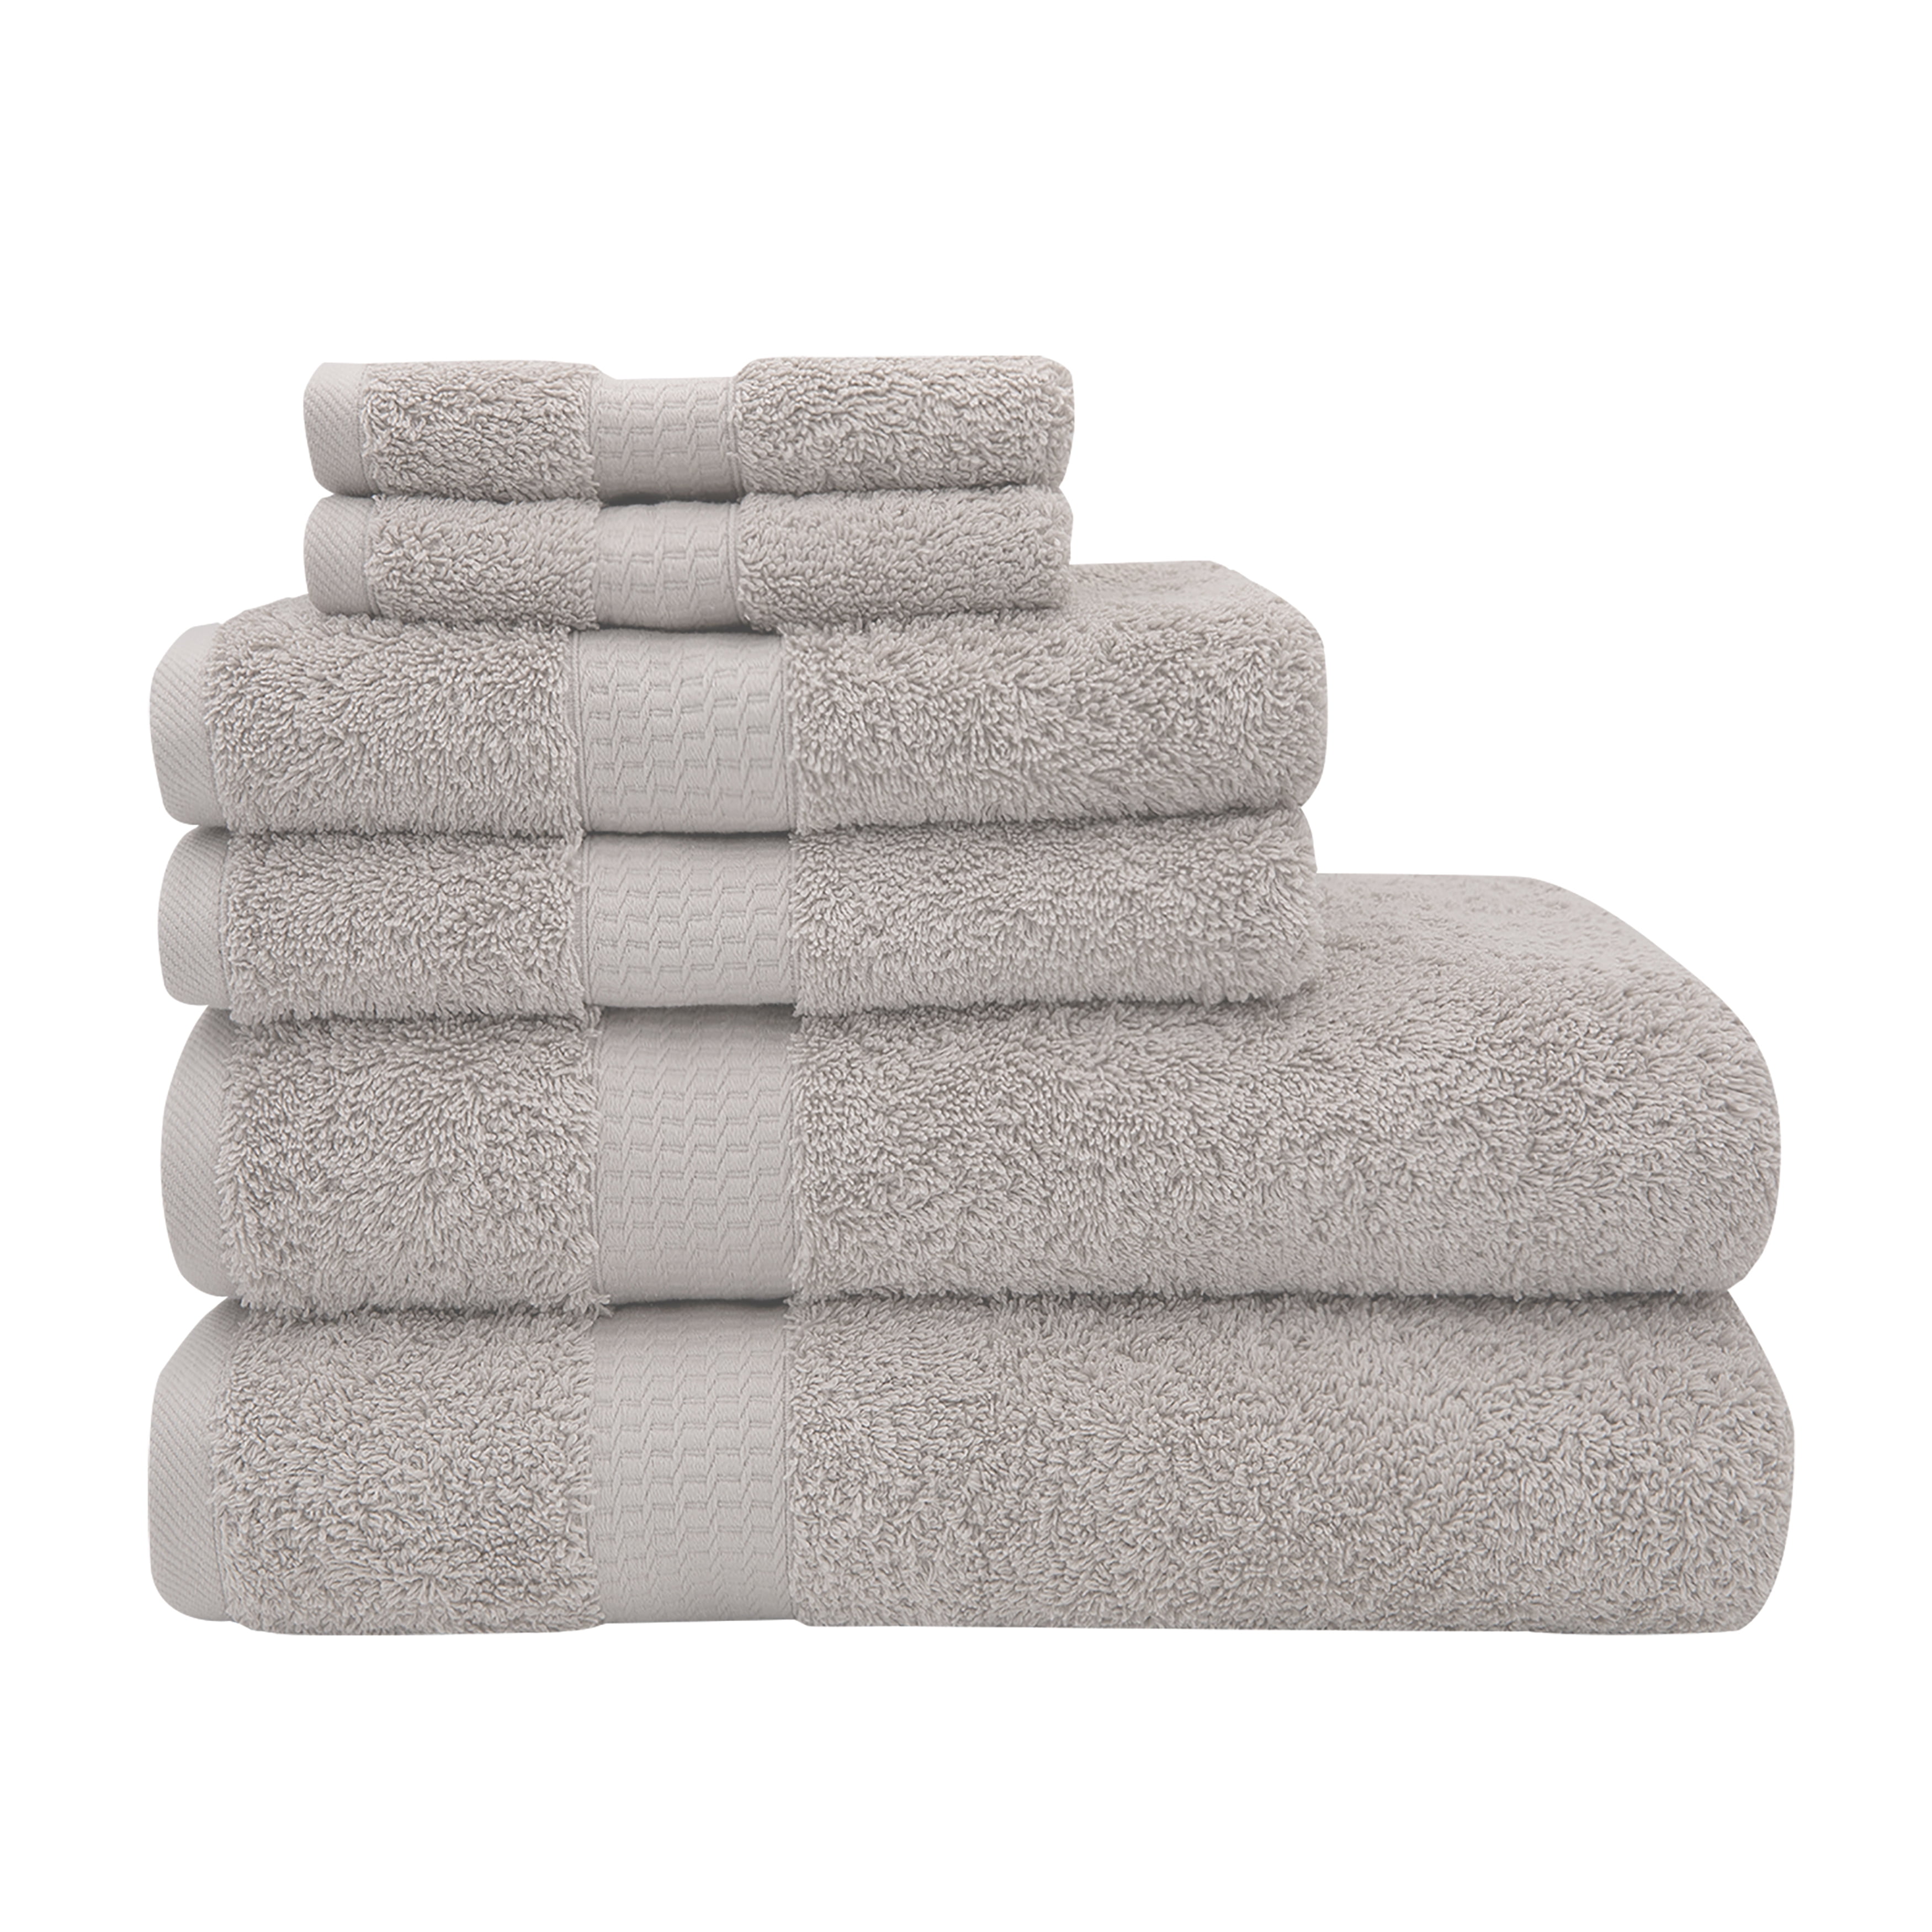 Bath Hand Plain White Egyptian Cotton Towels 